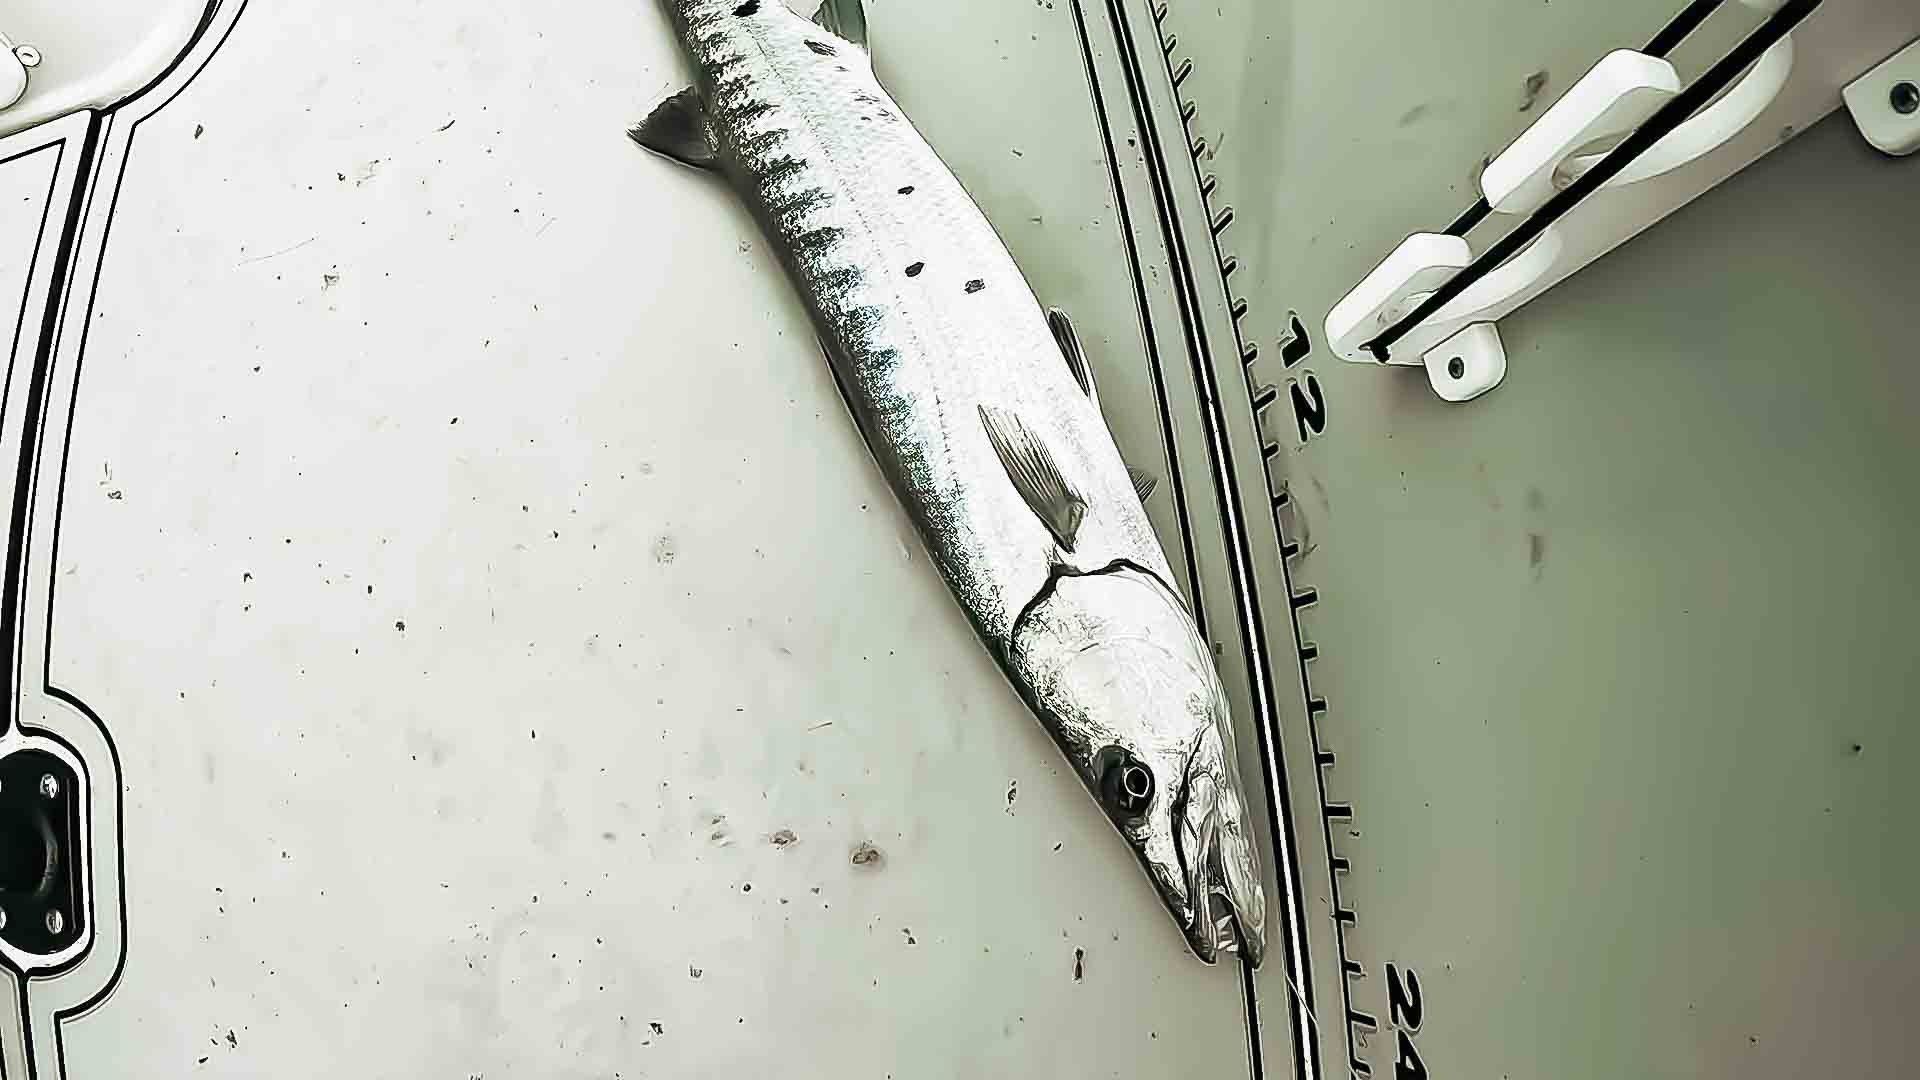 Barracuda por pesca de pargo de mangue